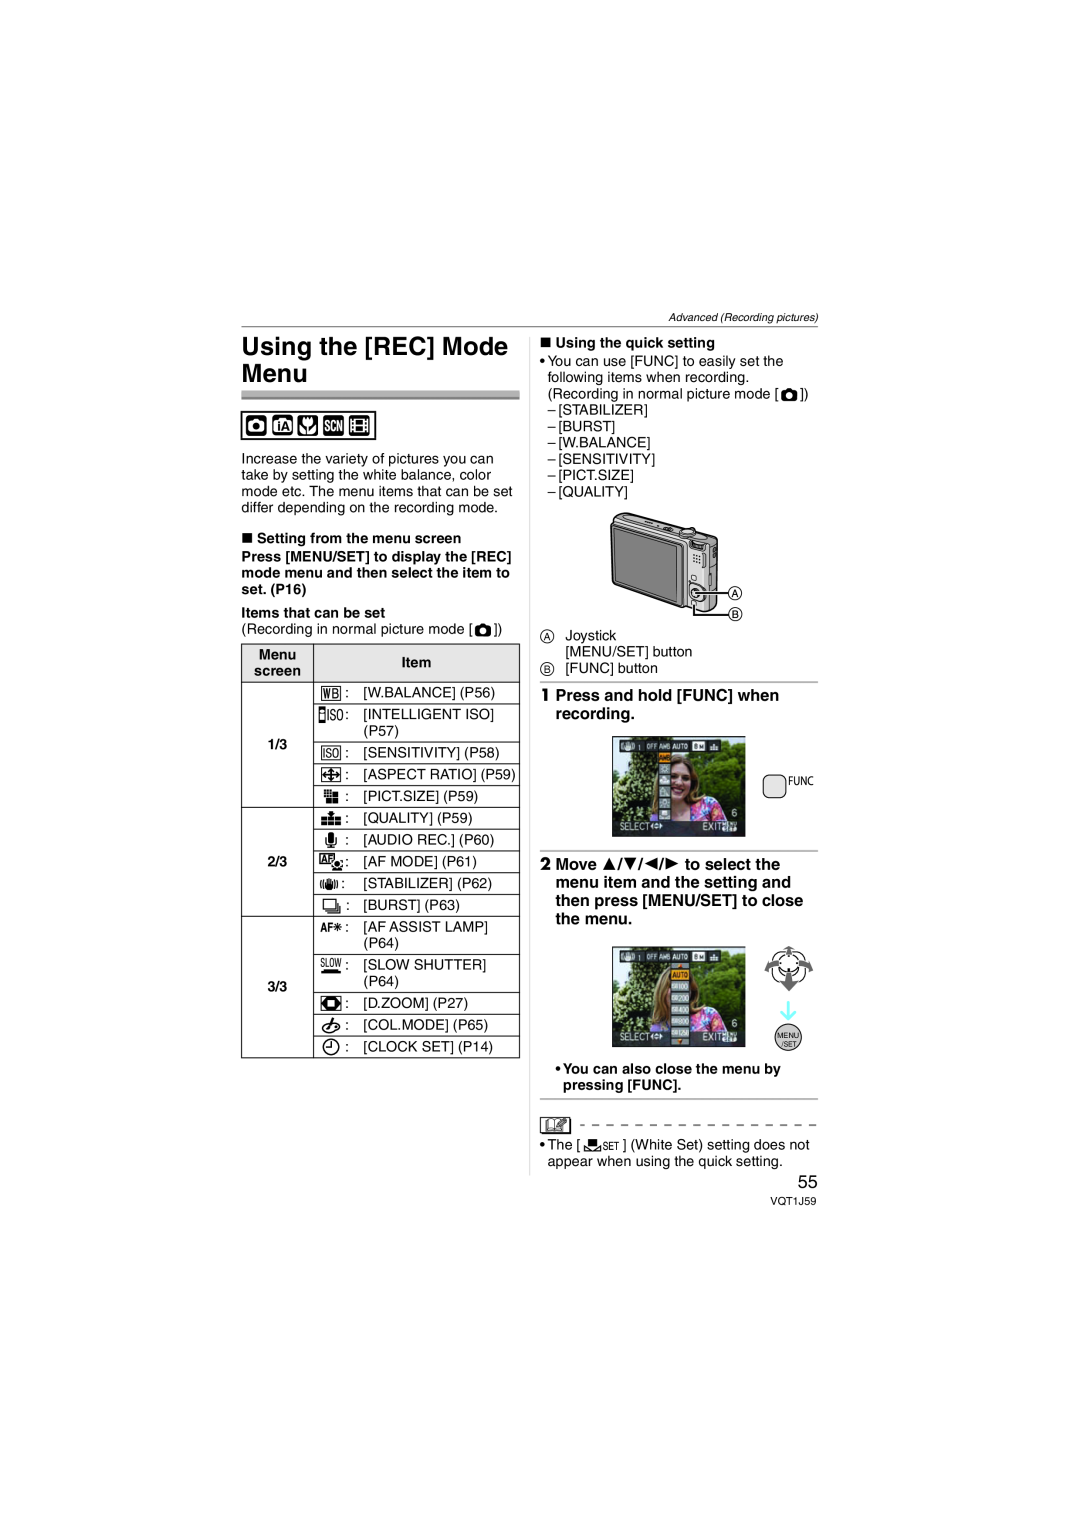 Panasonic DMC-FX55 Using the REC Mode Menu, Press and hold FUNC when recording, ∫ Setting from the menu screen 